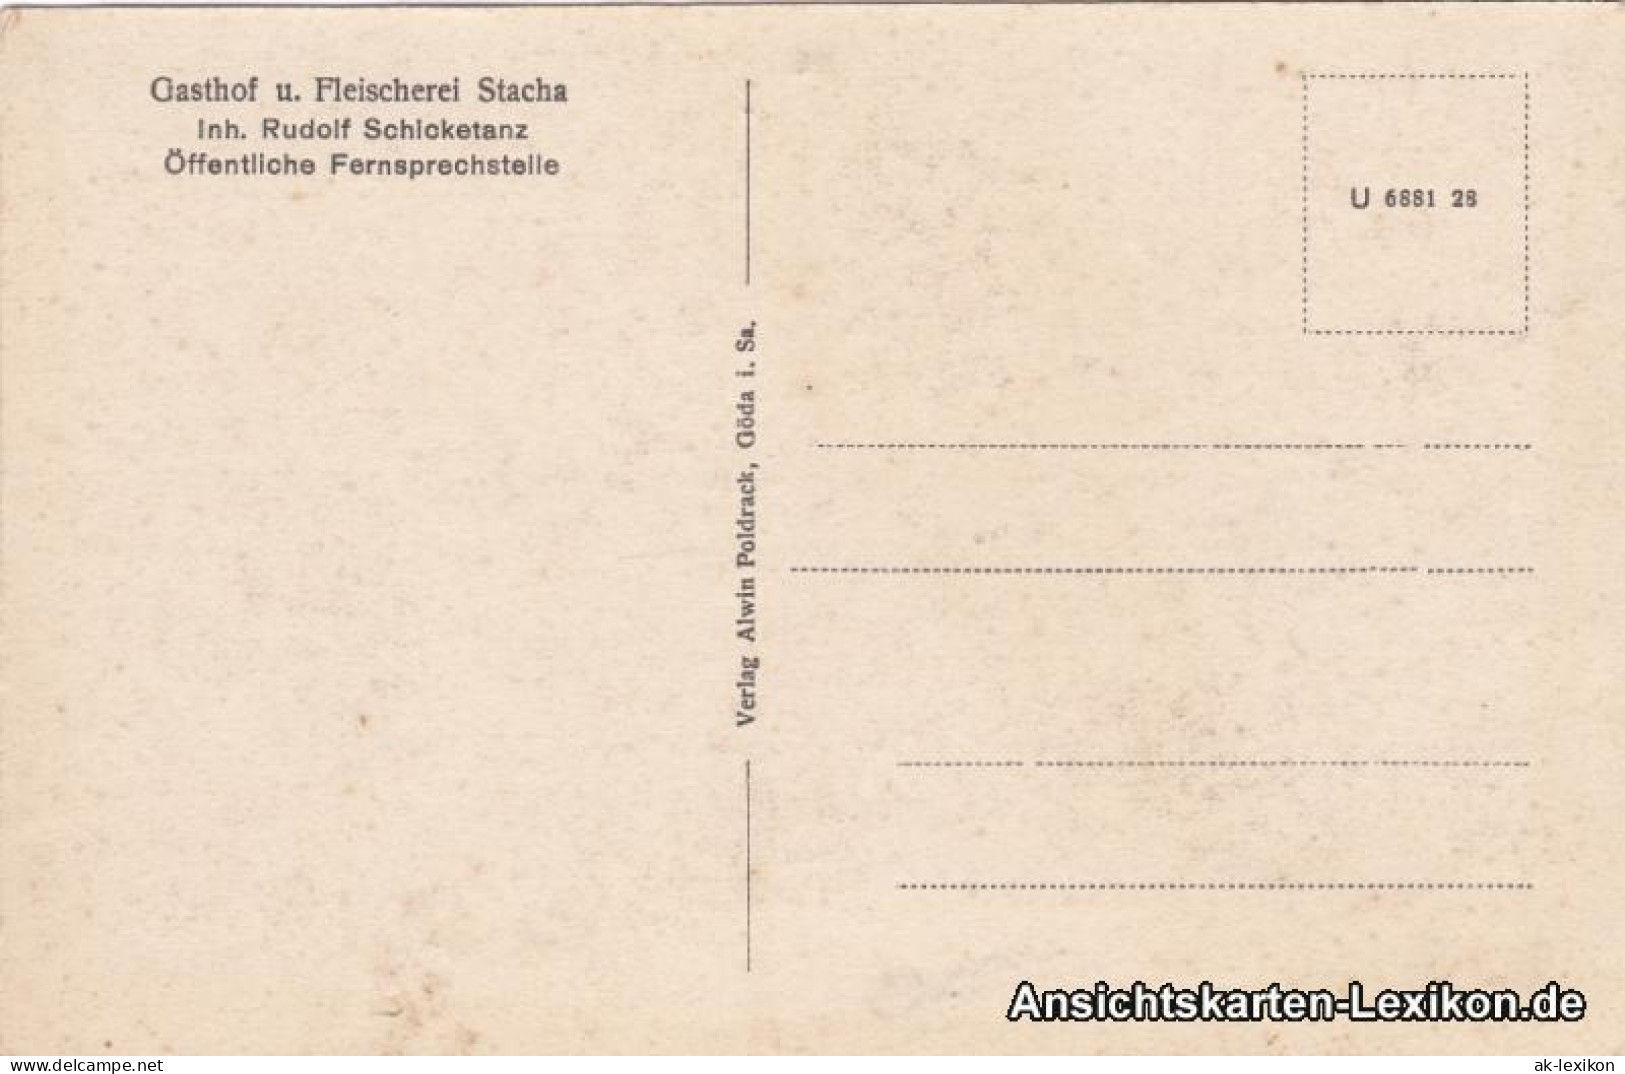 Stacha-Demitz-Thumitz Zemicy-Tumicy Gasthof Fleischerei: Konzert- Ballsaal 1922 - Demitz-Thumitz